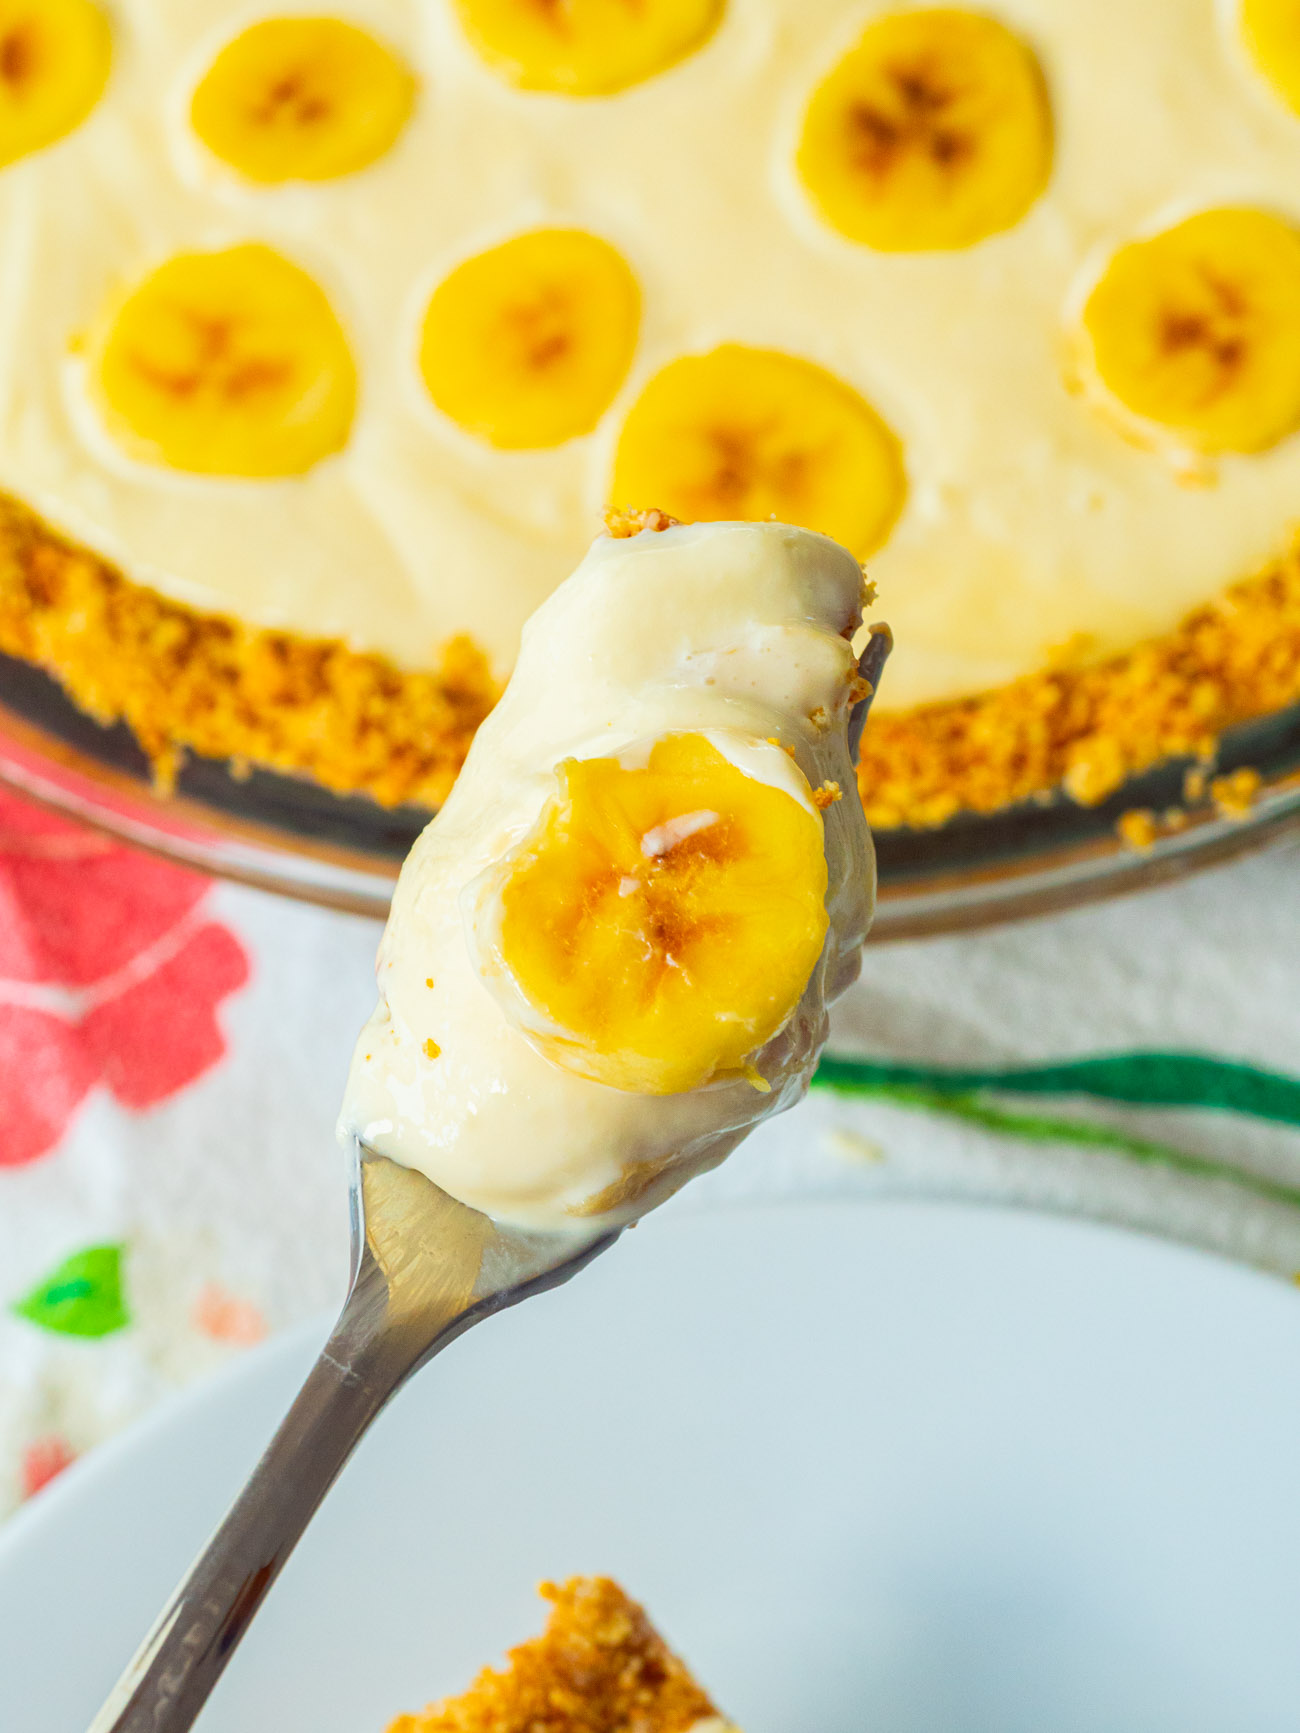 Banana Breeze Cream Pie